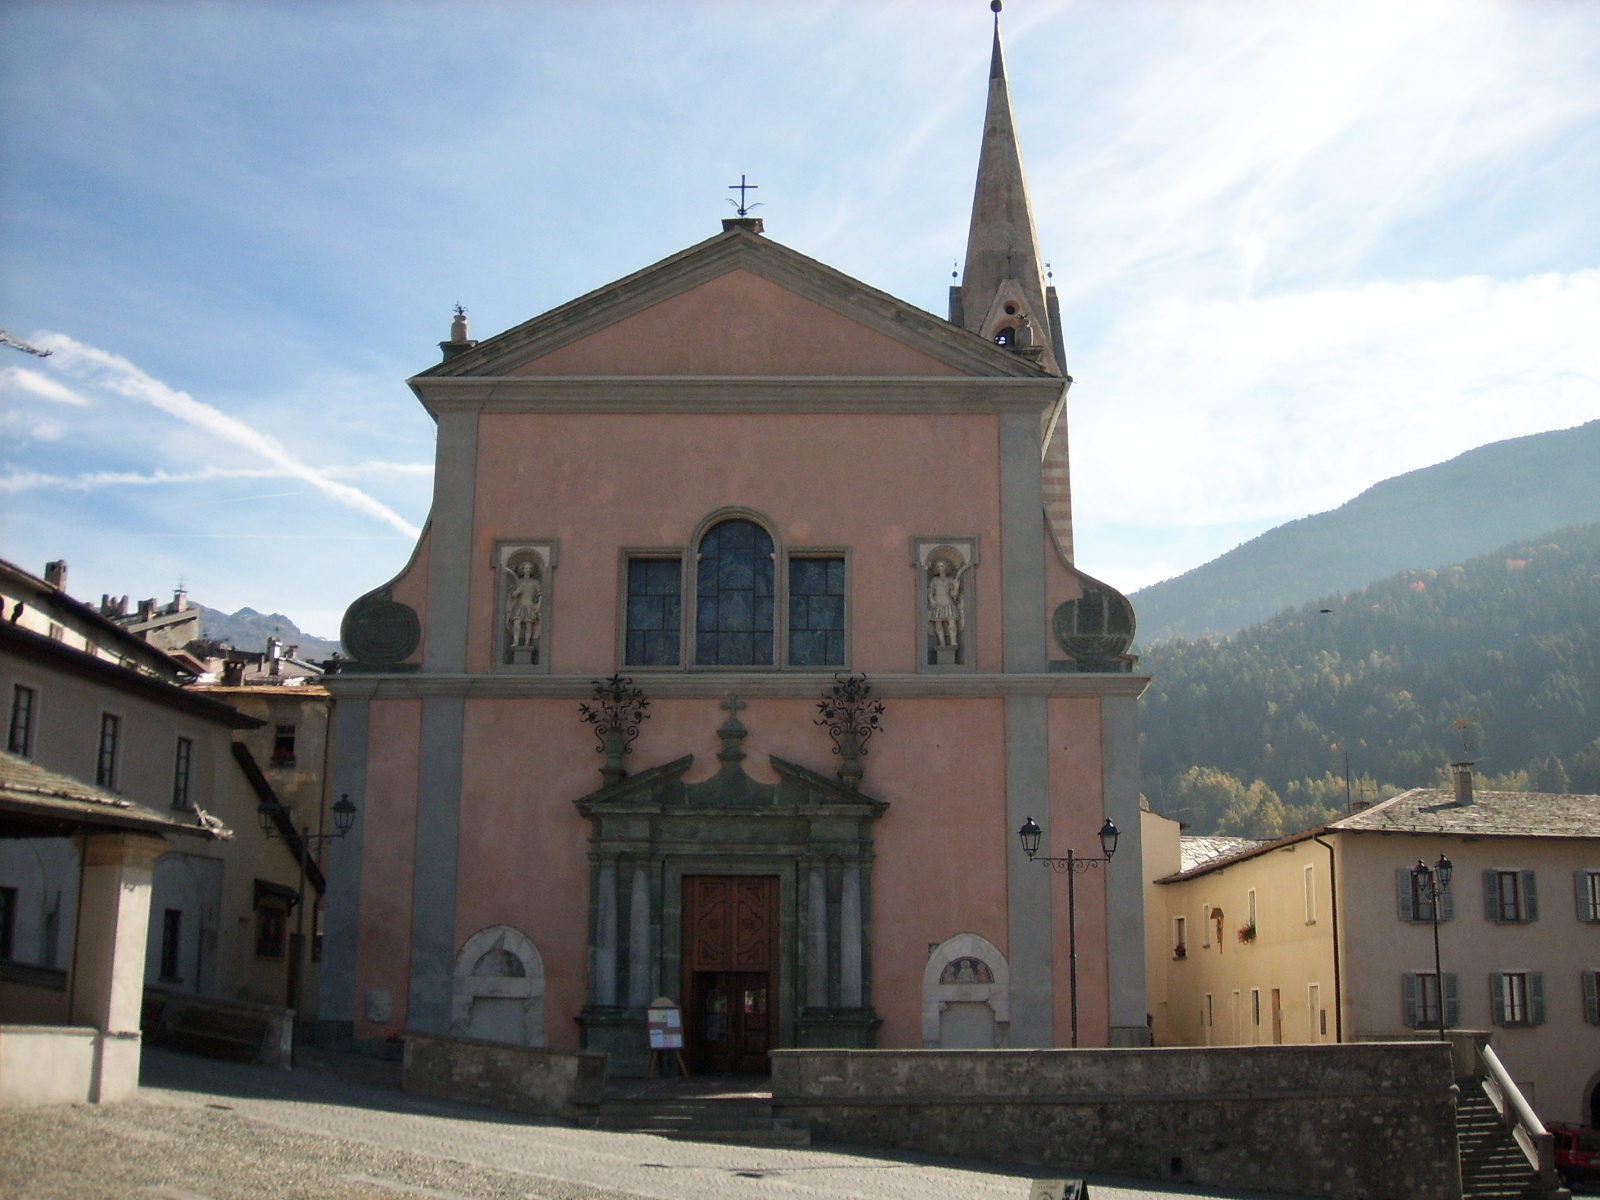 Chiesa Parrocchiale dei Santi Gervasio e Protasio in Italy, Europe | Architecture - Rated 0.9